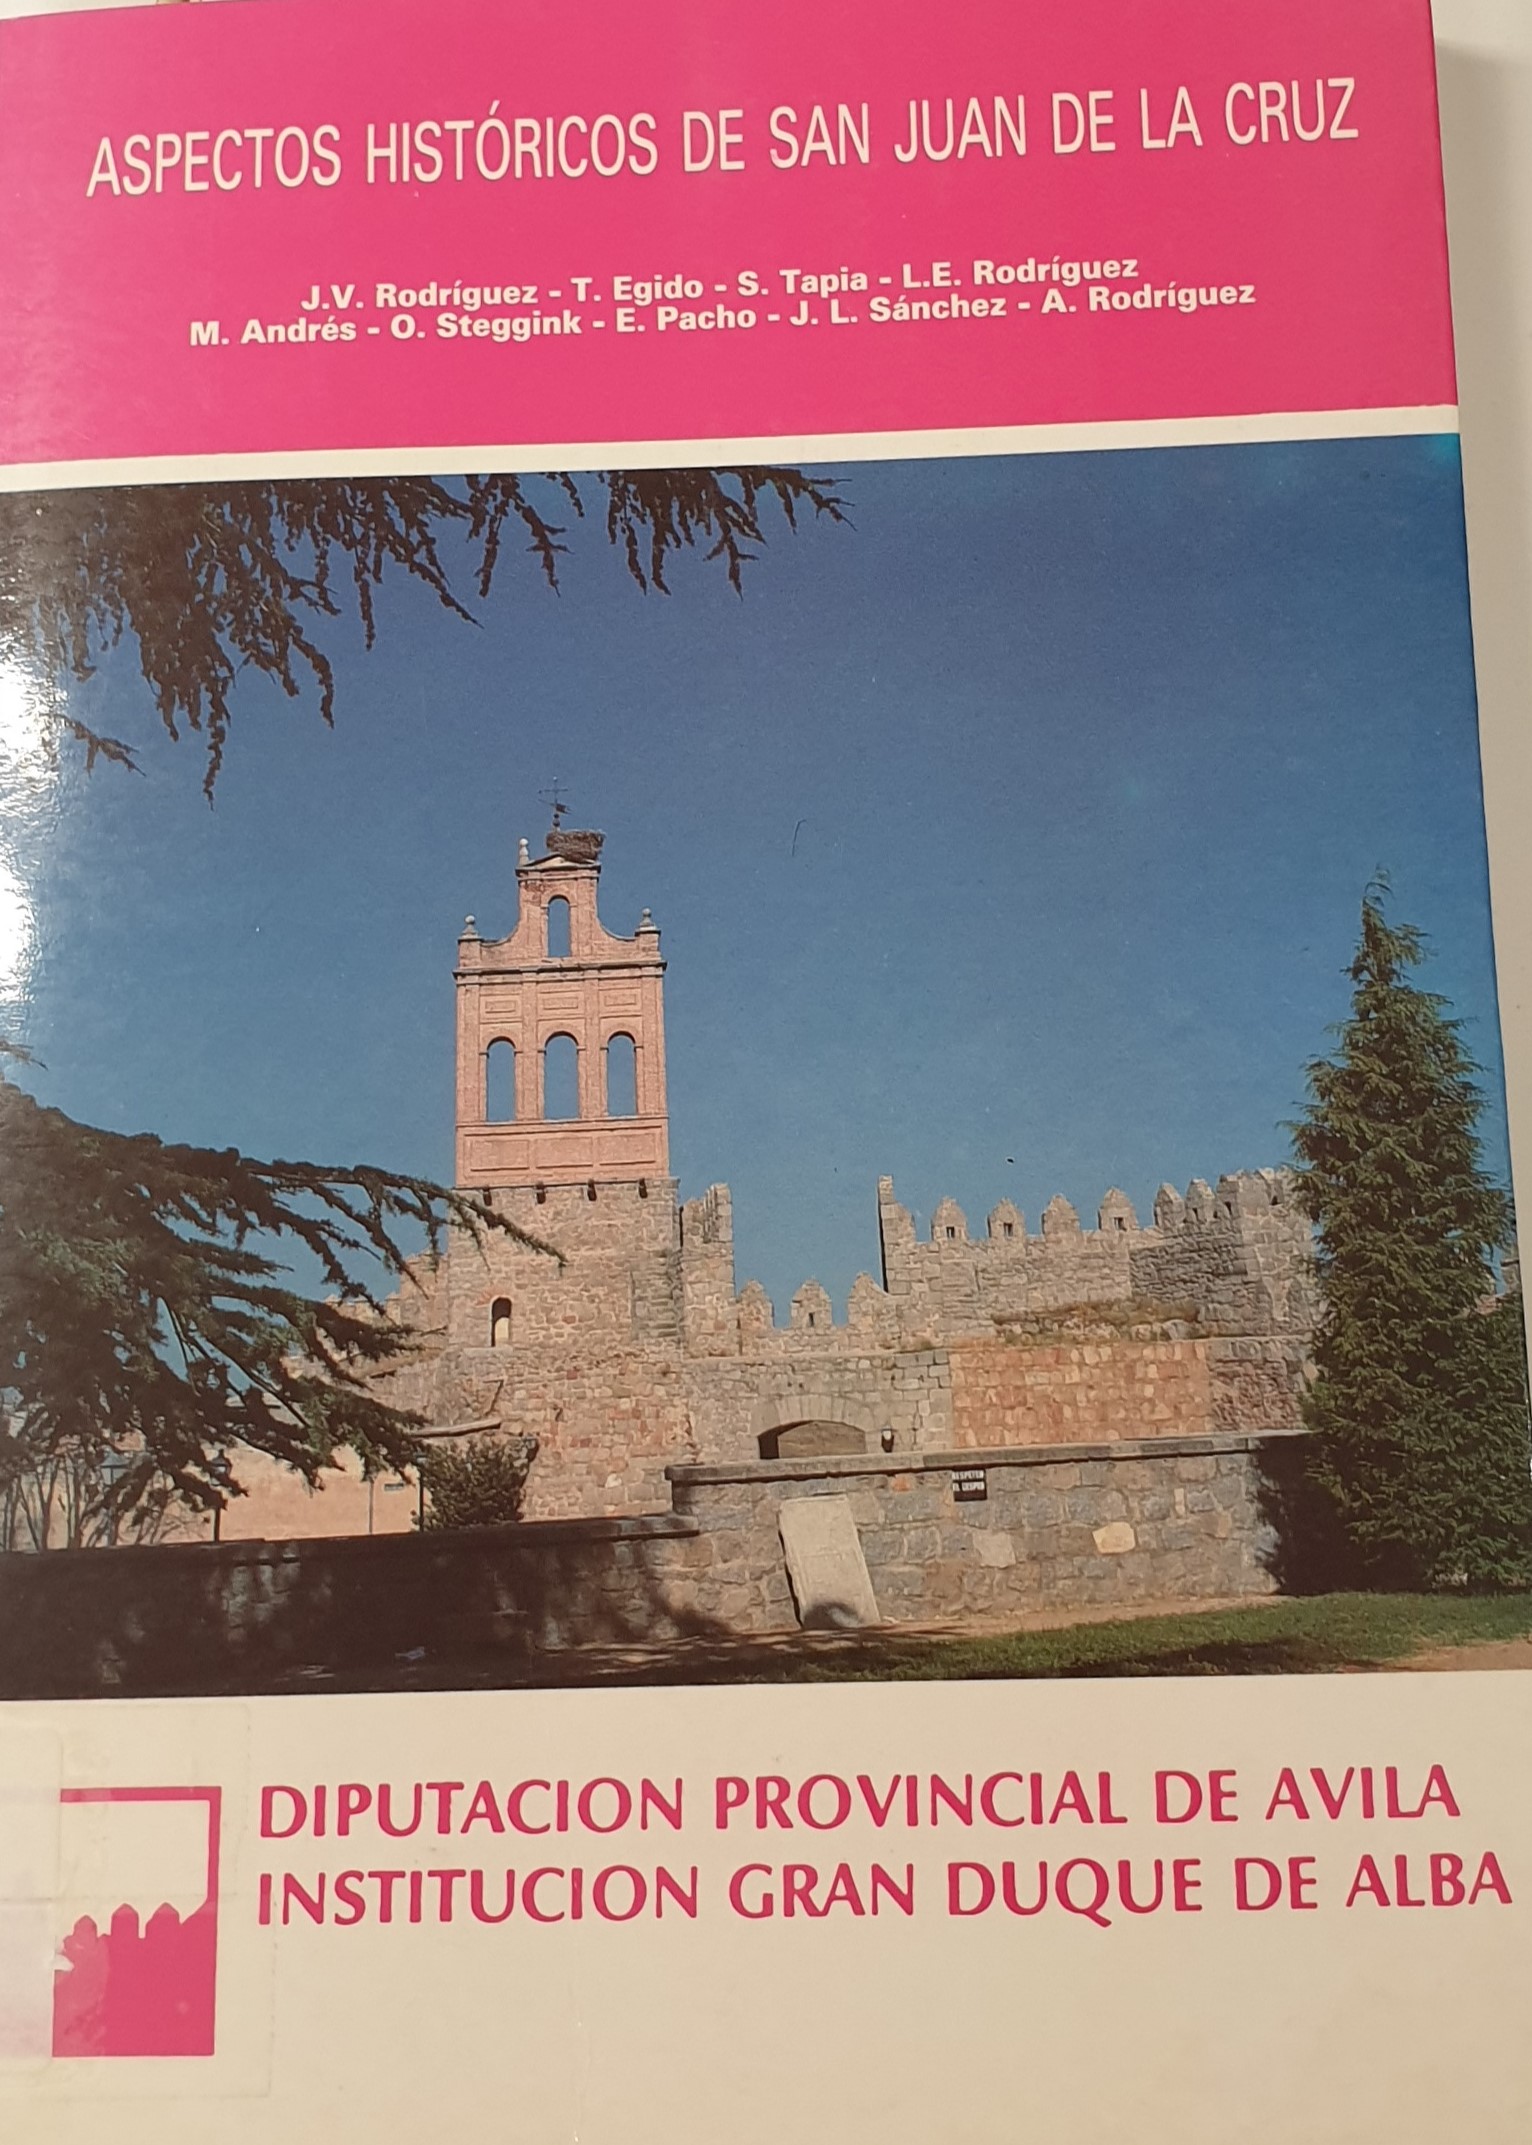 Imagen de portada del libro Aspectos históricos de San Juan de la Cruz